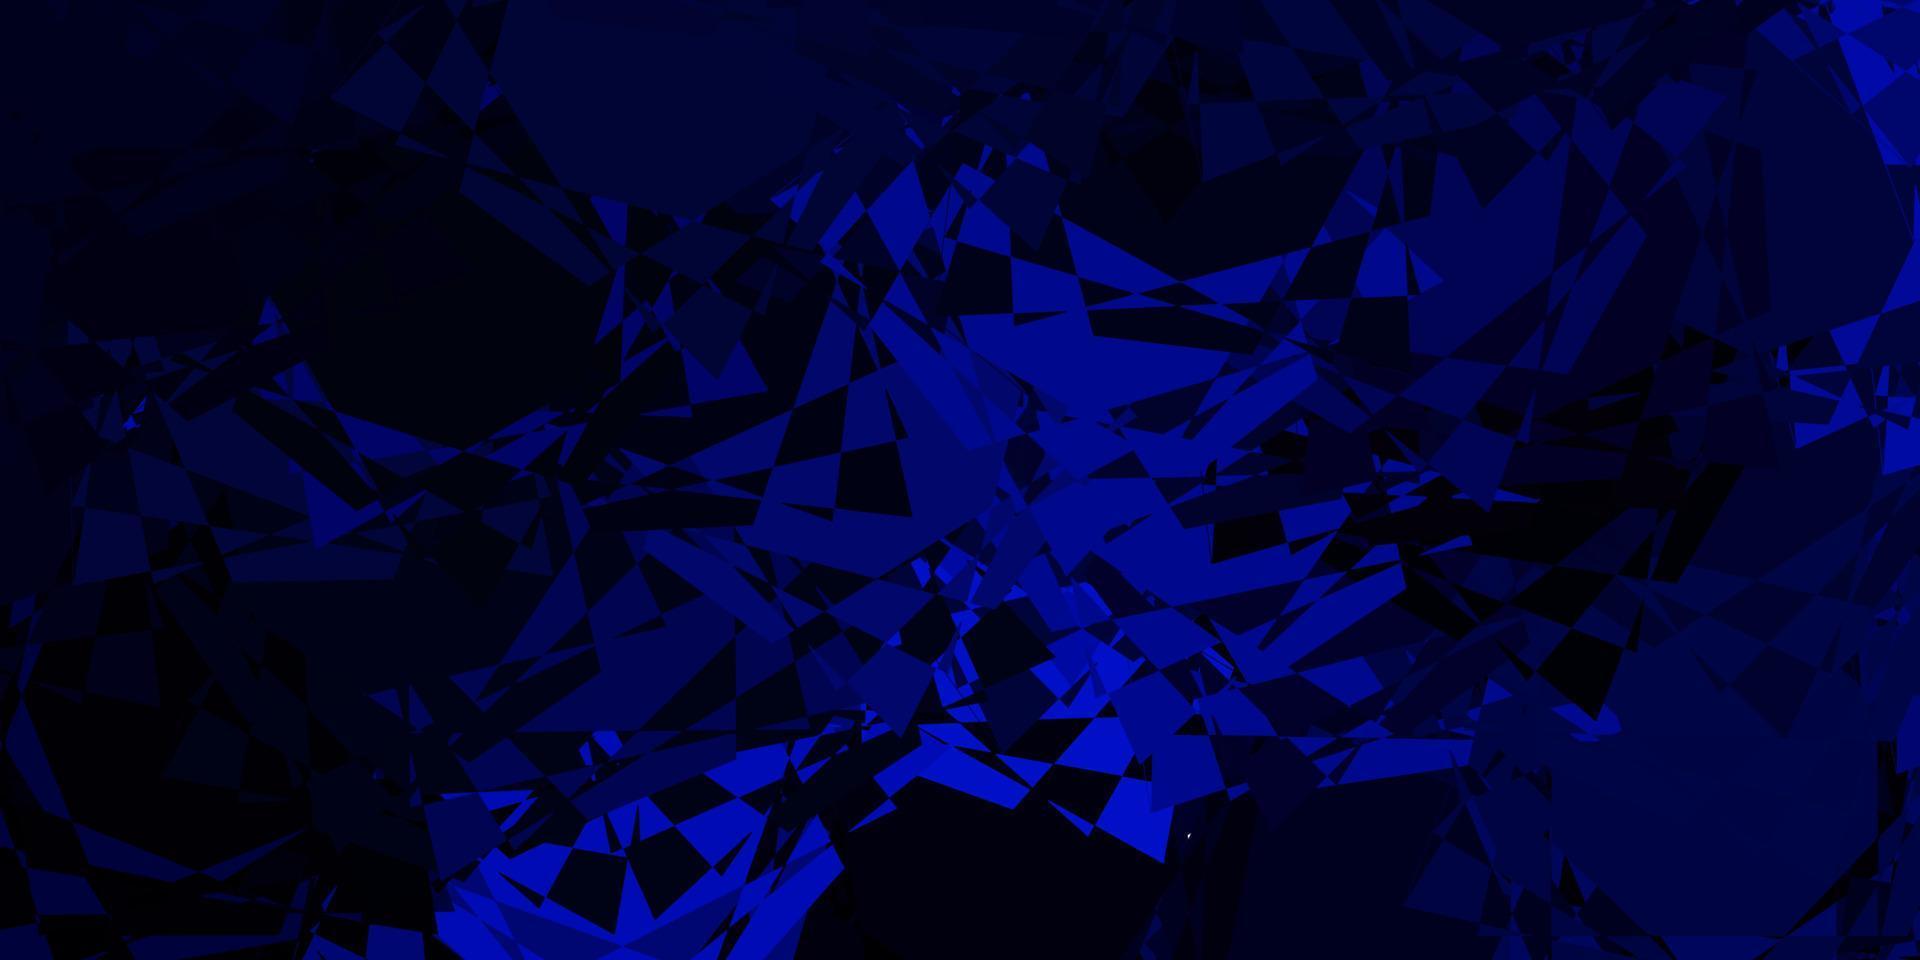 layout de vetor de azul escuro com formas de triângulo.